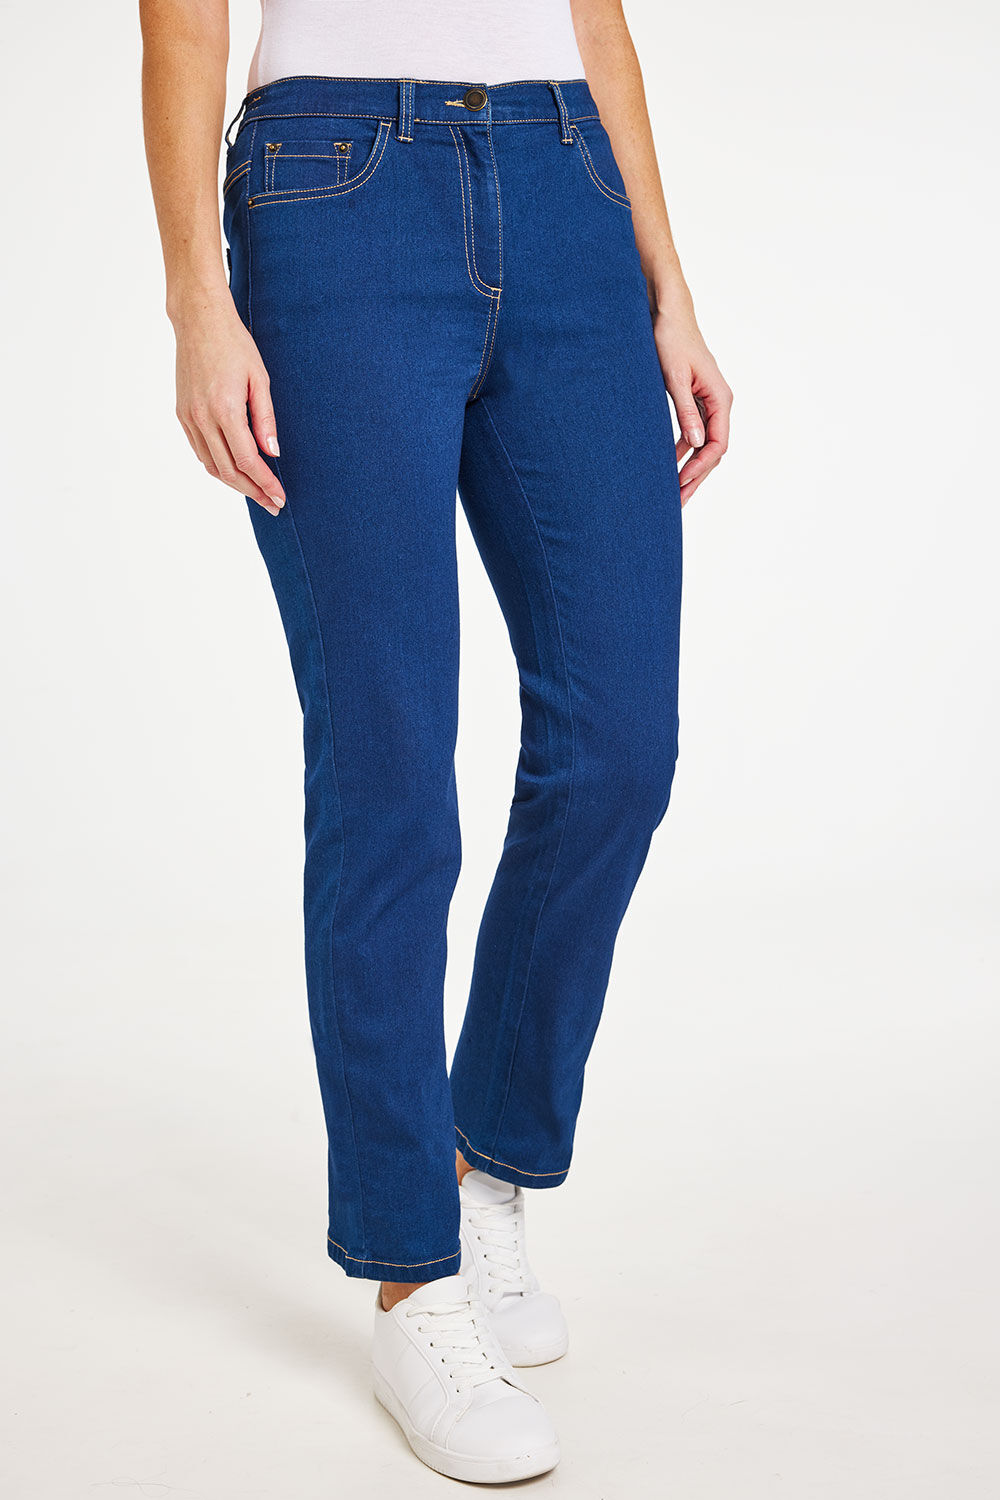 Bonmarche Women’s Navy Blue Cotton The SARA Straight Leg Jeans, Size: 16